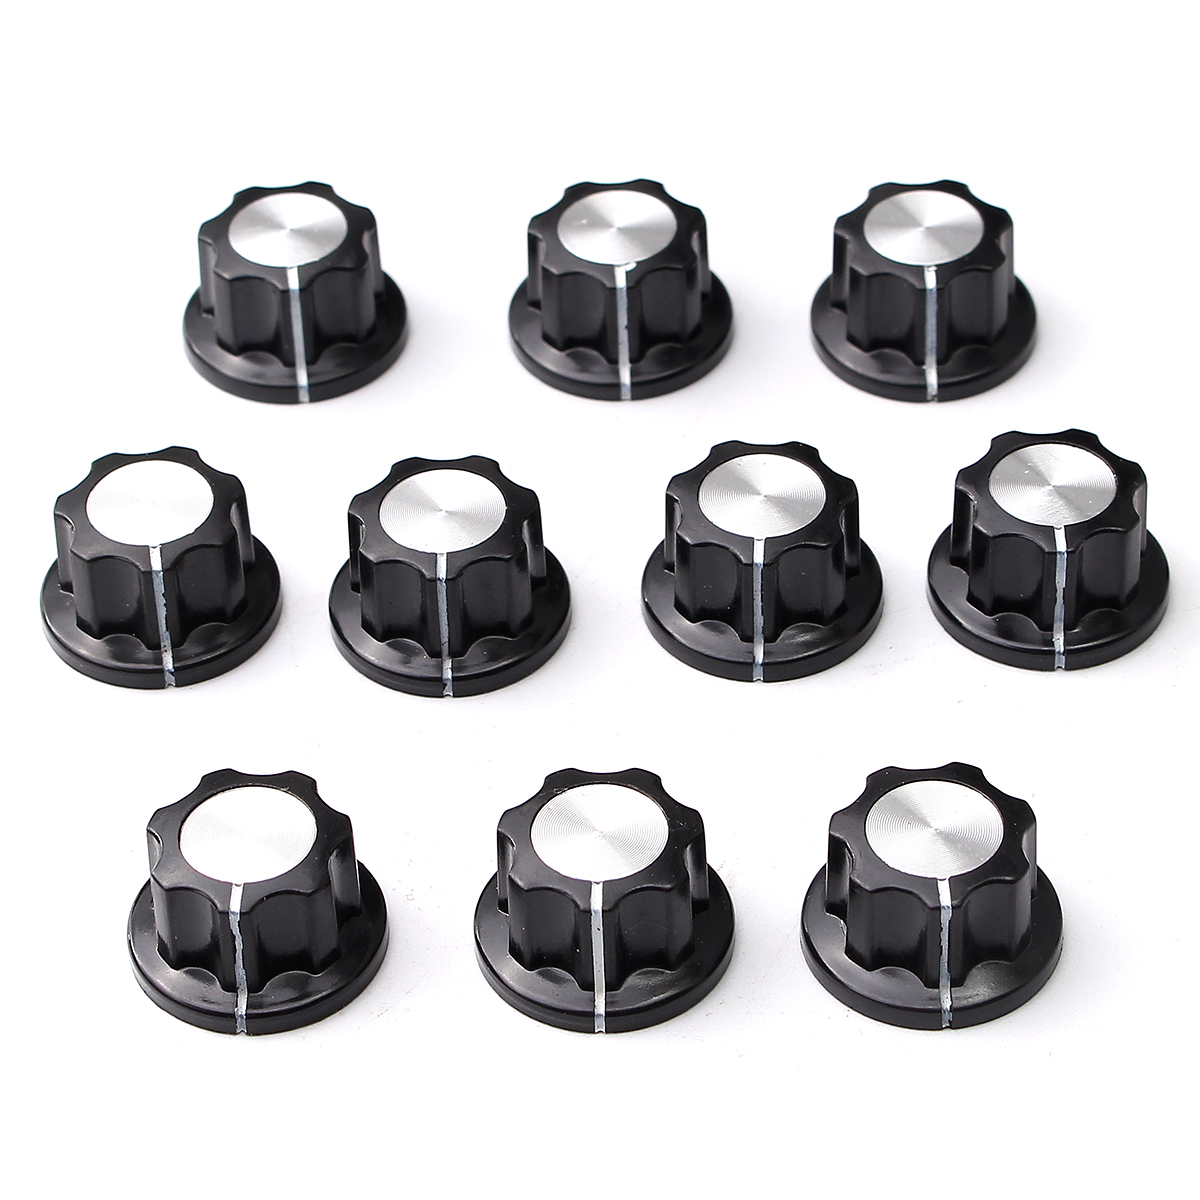 

10Pcs Nonslip Potentiometer Rotary Control Knobs 6mm Hole 12mm Top Black Silver Tone Shift Knob